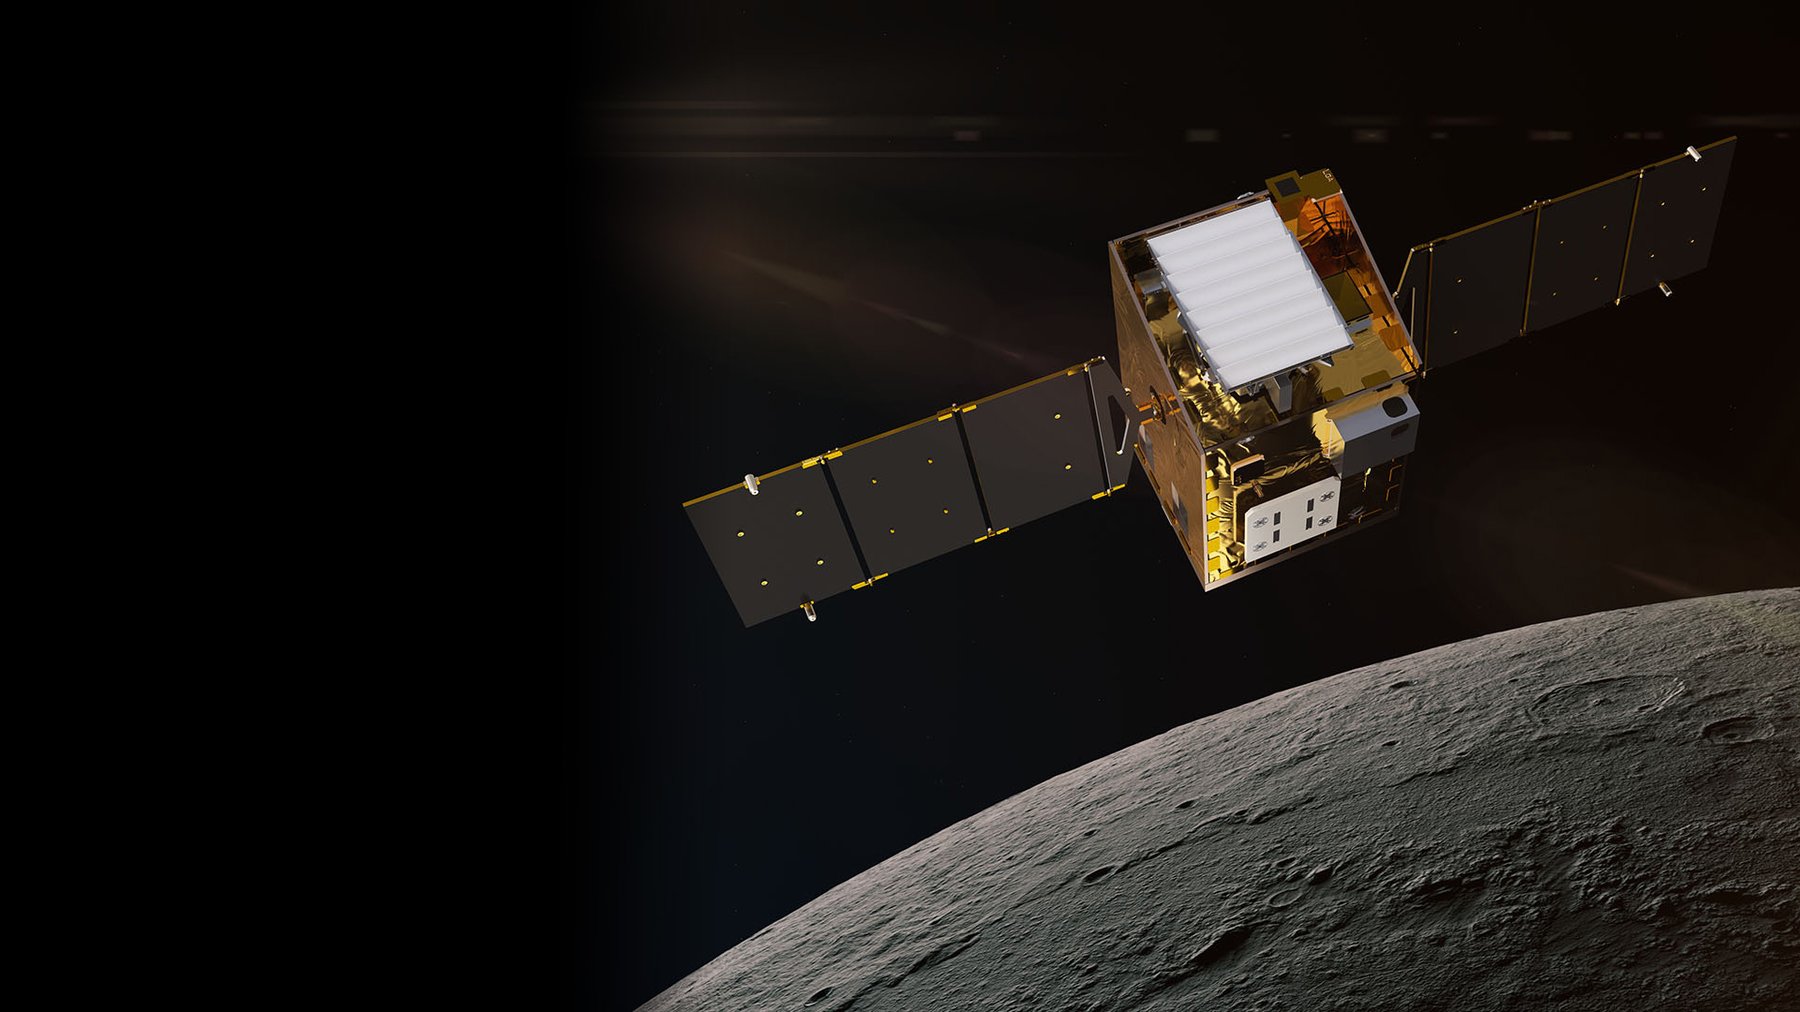 Boxy, SmallSat in orbit over the Moon